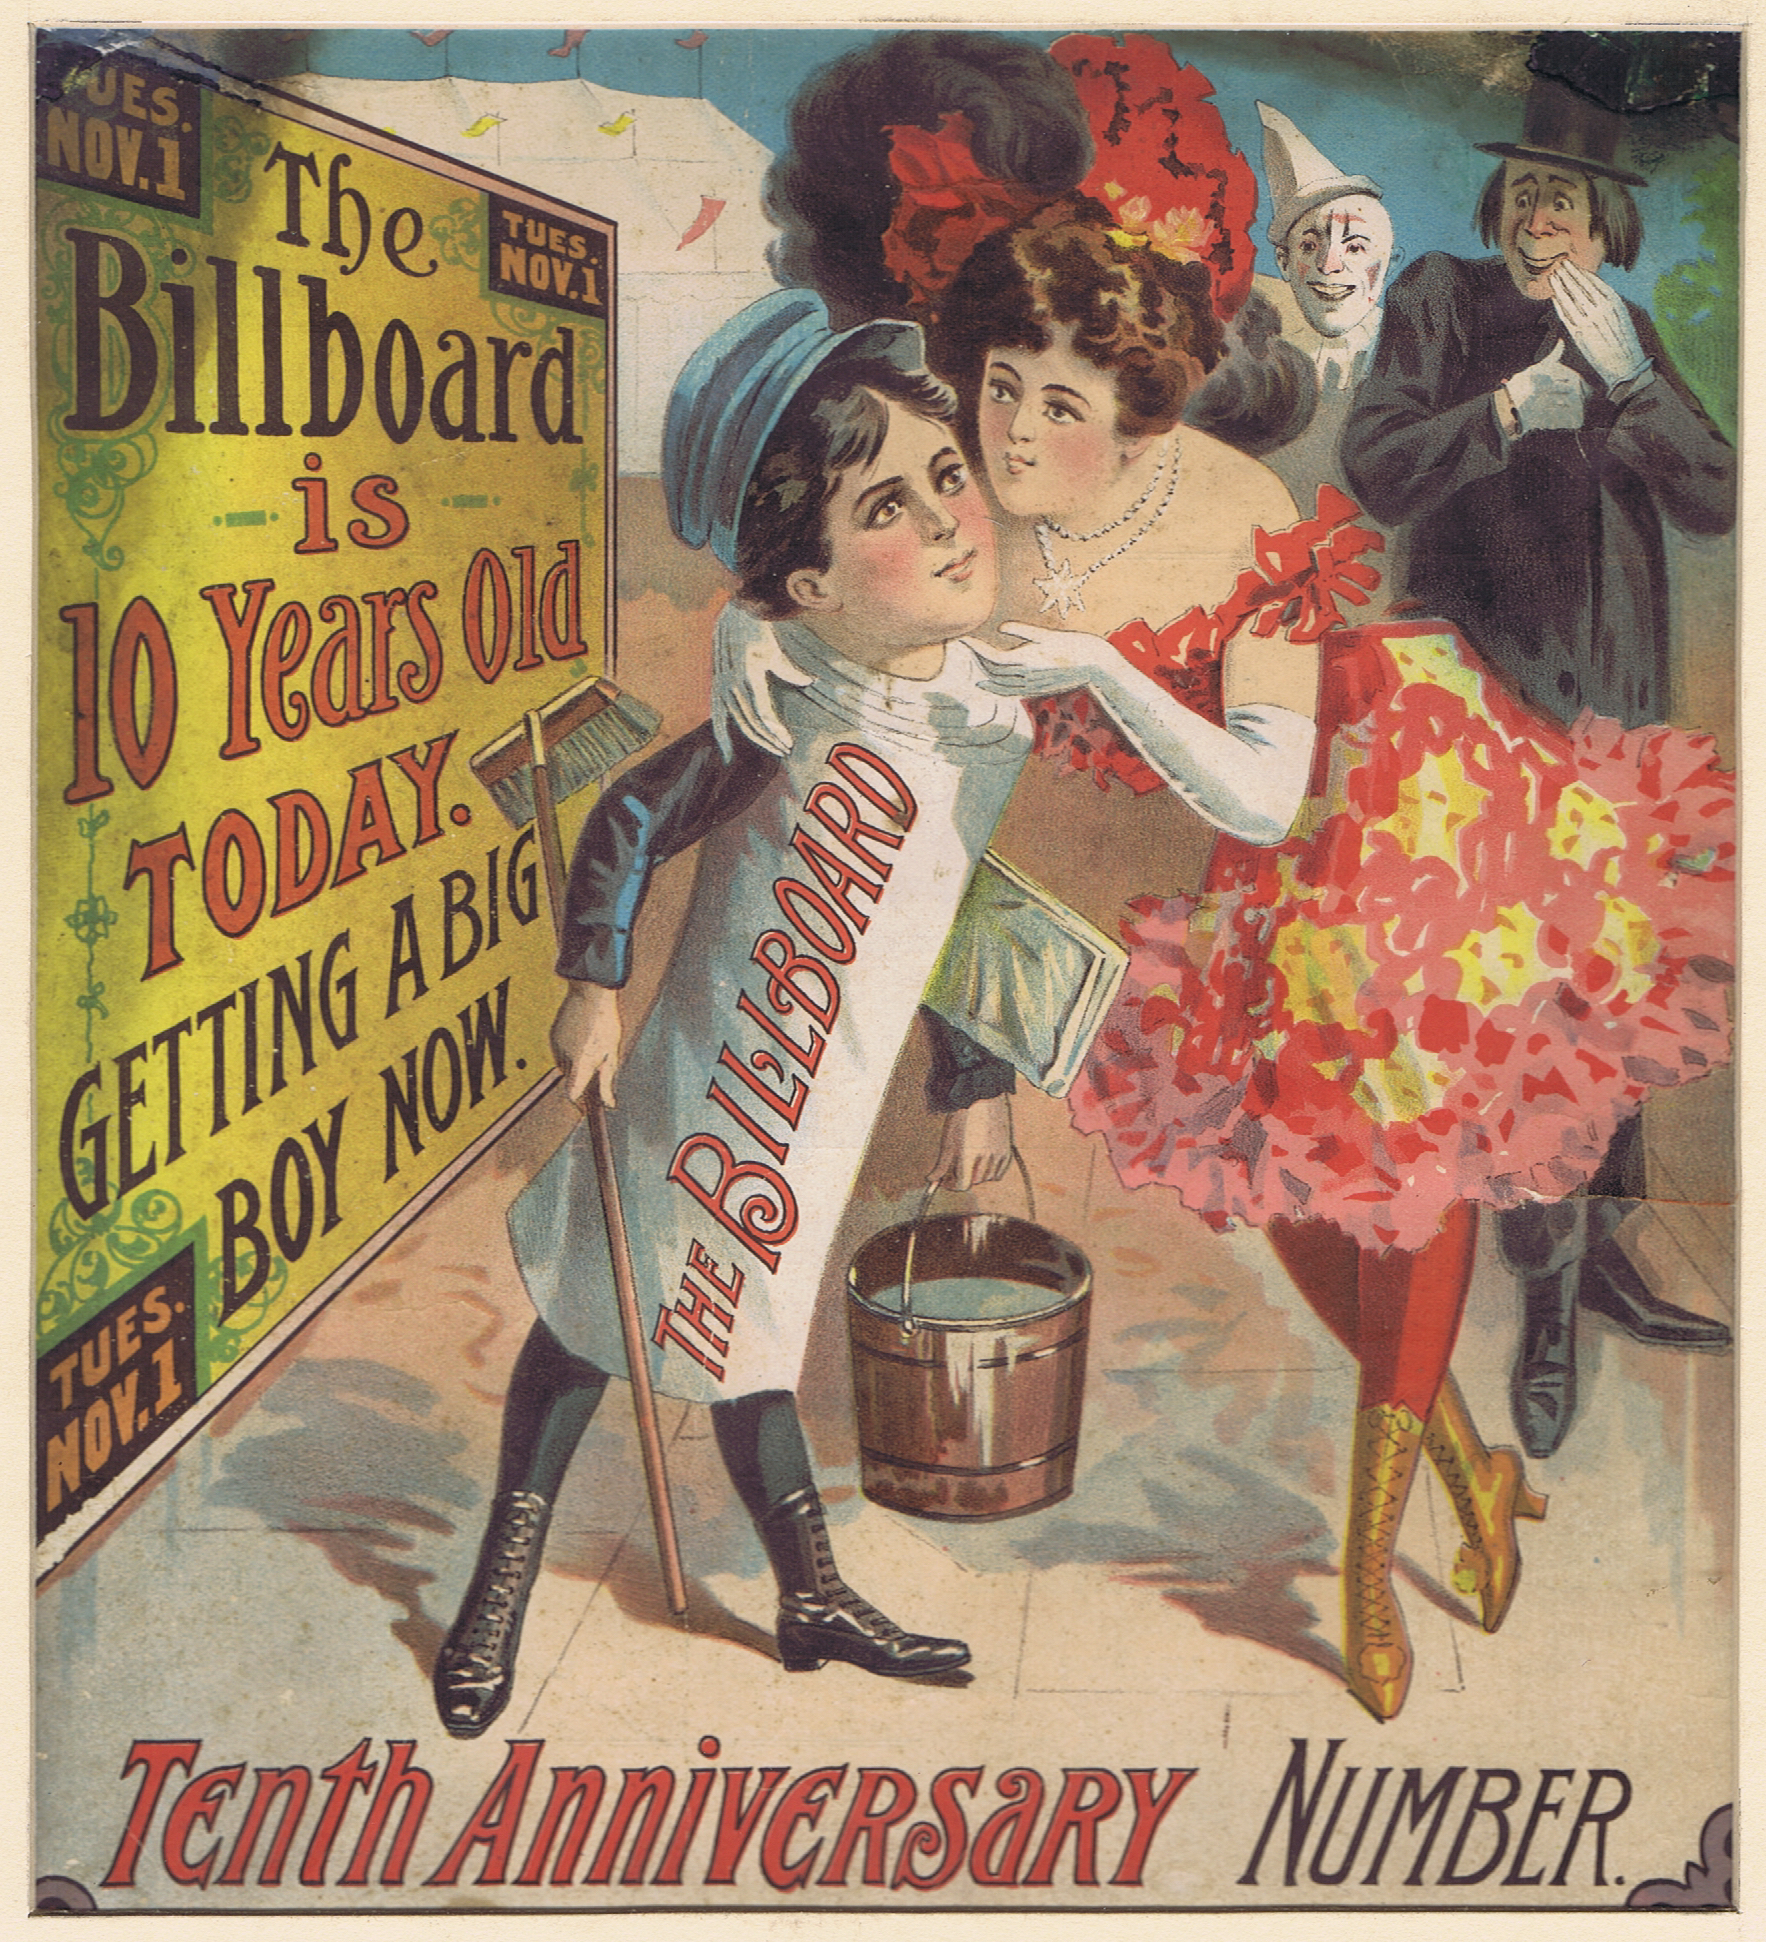 J869	BILLBOARD MAGAZINE 10TH ANNIVERSARY COVER 1904